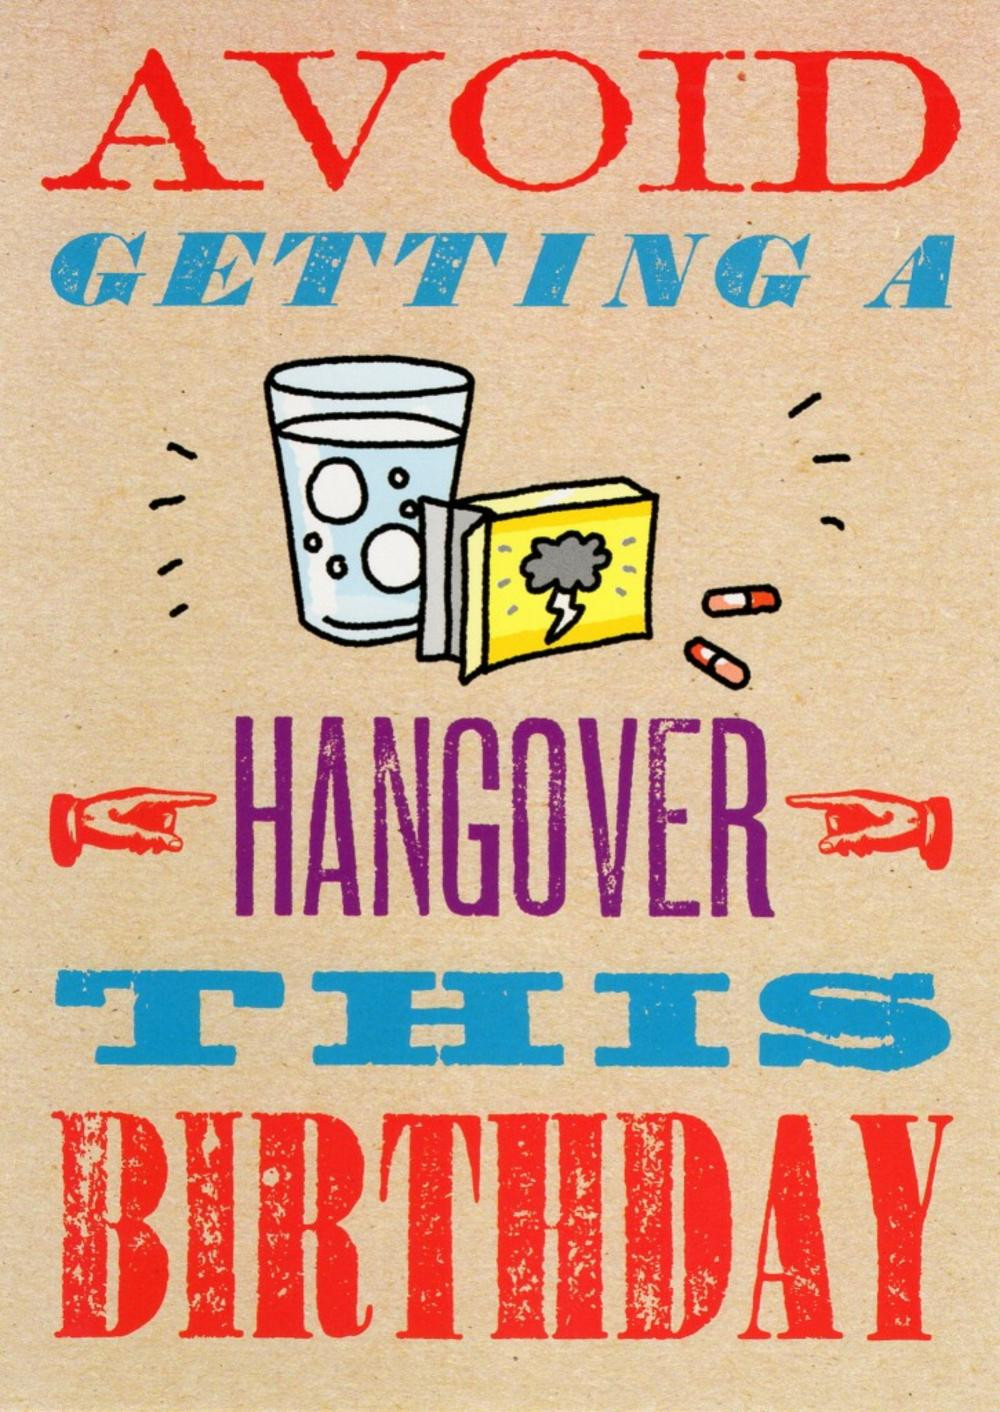 Fun Birthday Cards
 Avoid Getting A Hangover Funny Birthday Card